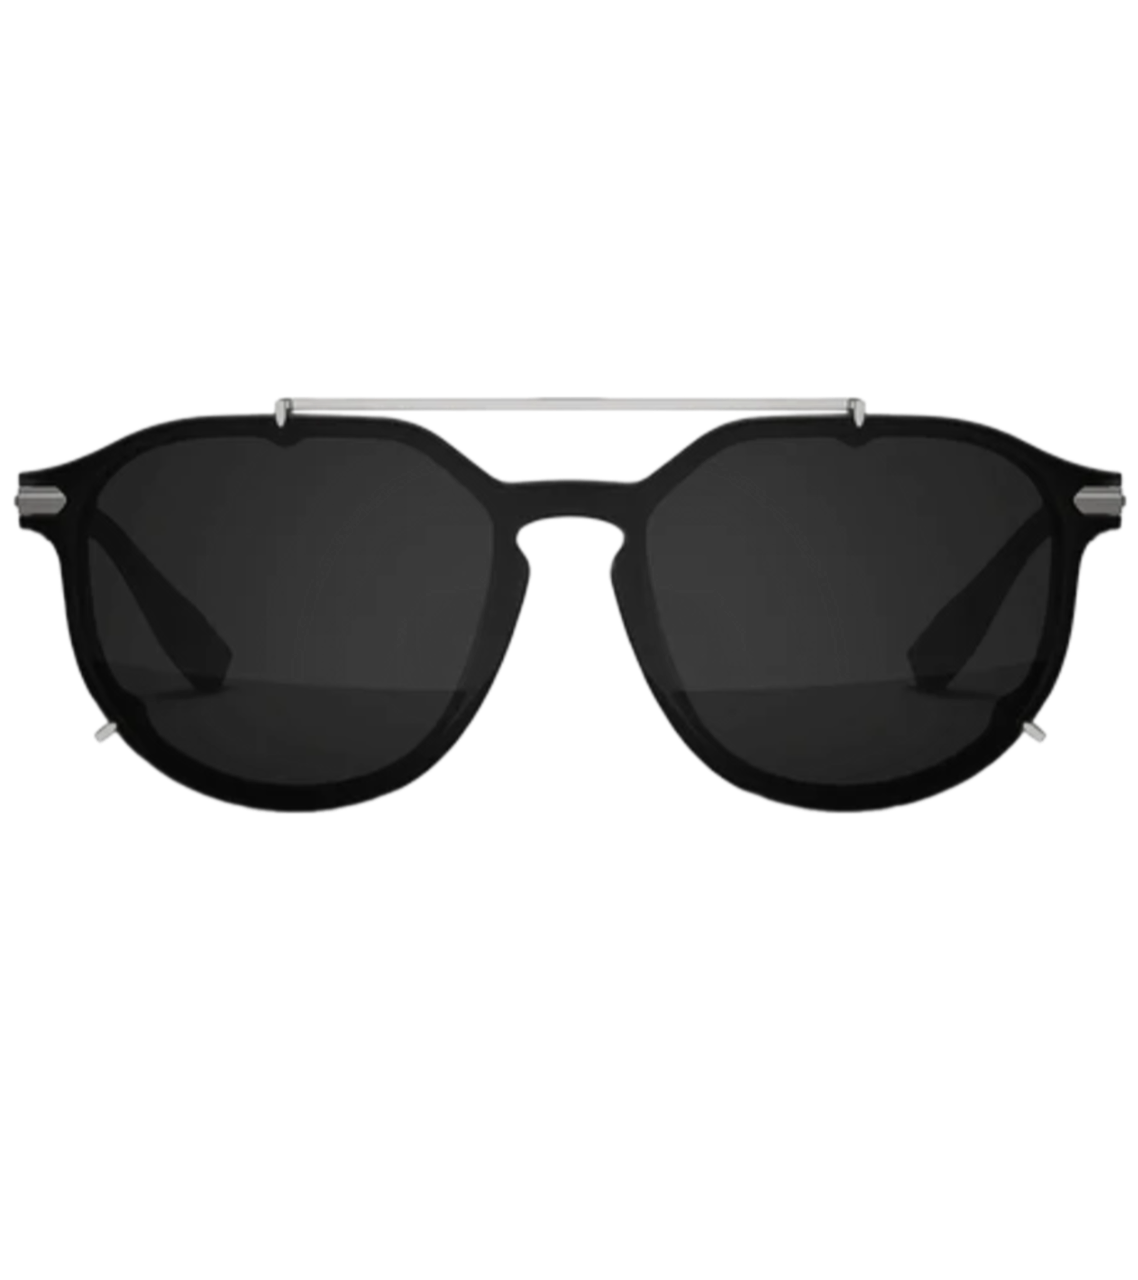 Cолнцезащитные очки Golden Concept Entrepreneur - Silver